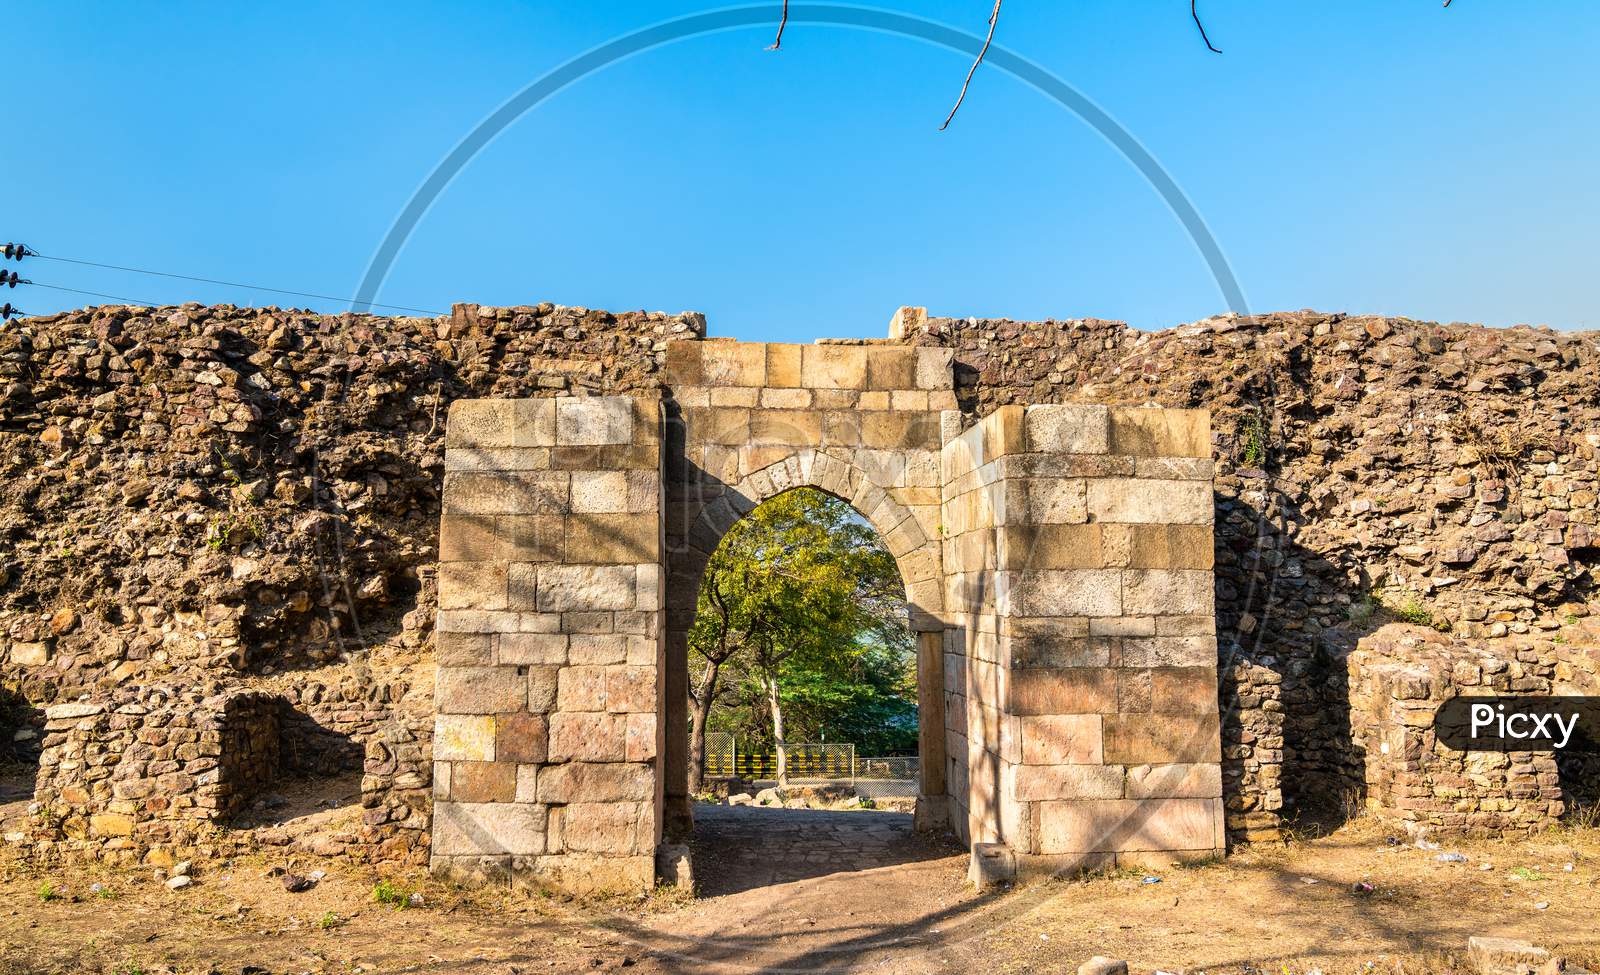 Atak Gate Of Pavagadh Fort - Gujarat State In India